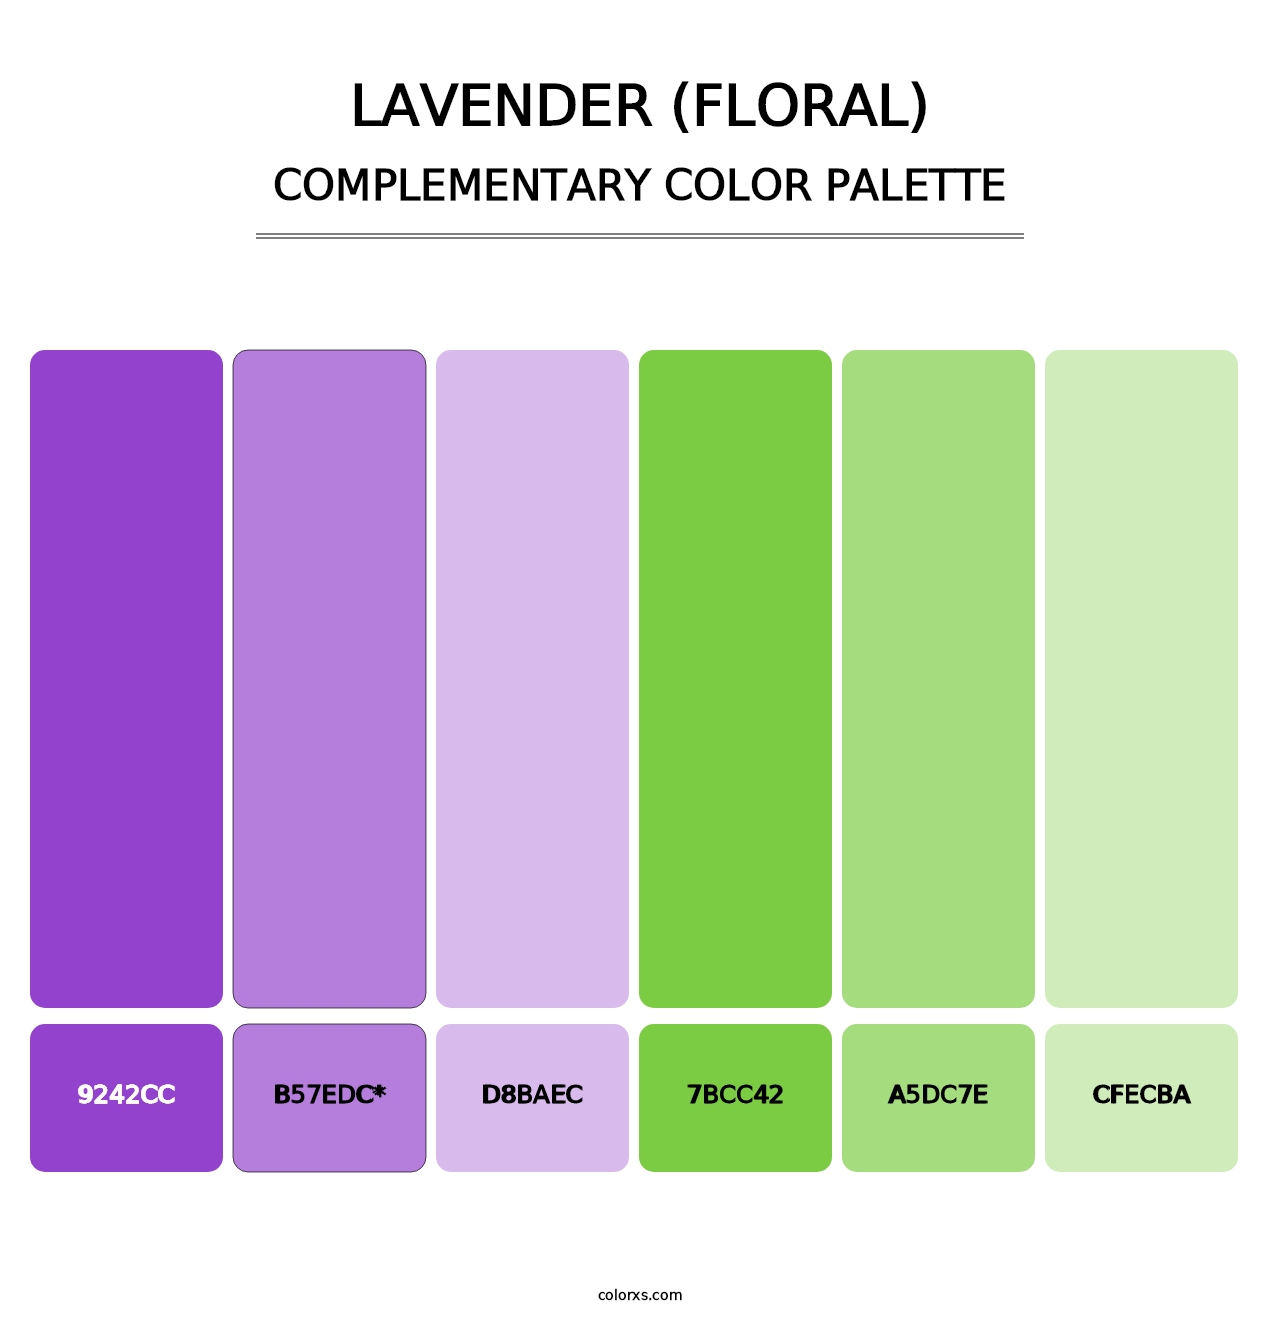 Lavender (Floral) - Complementary Color Palette